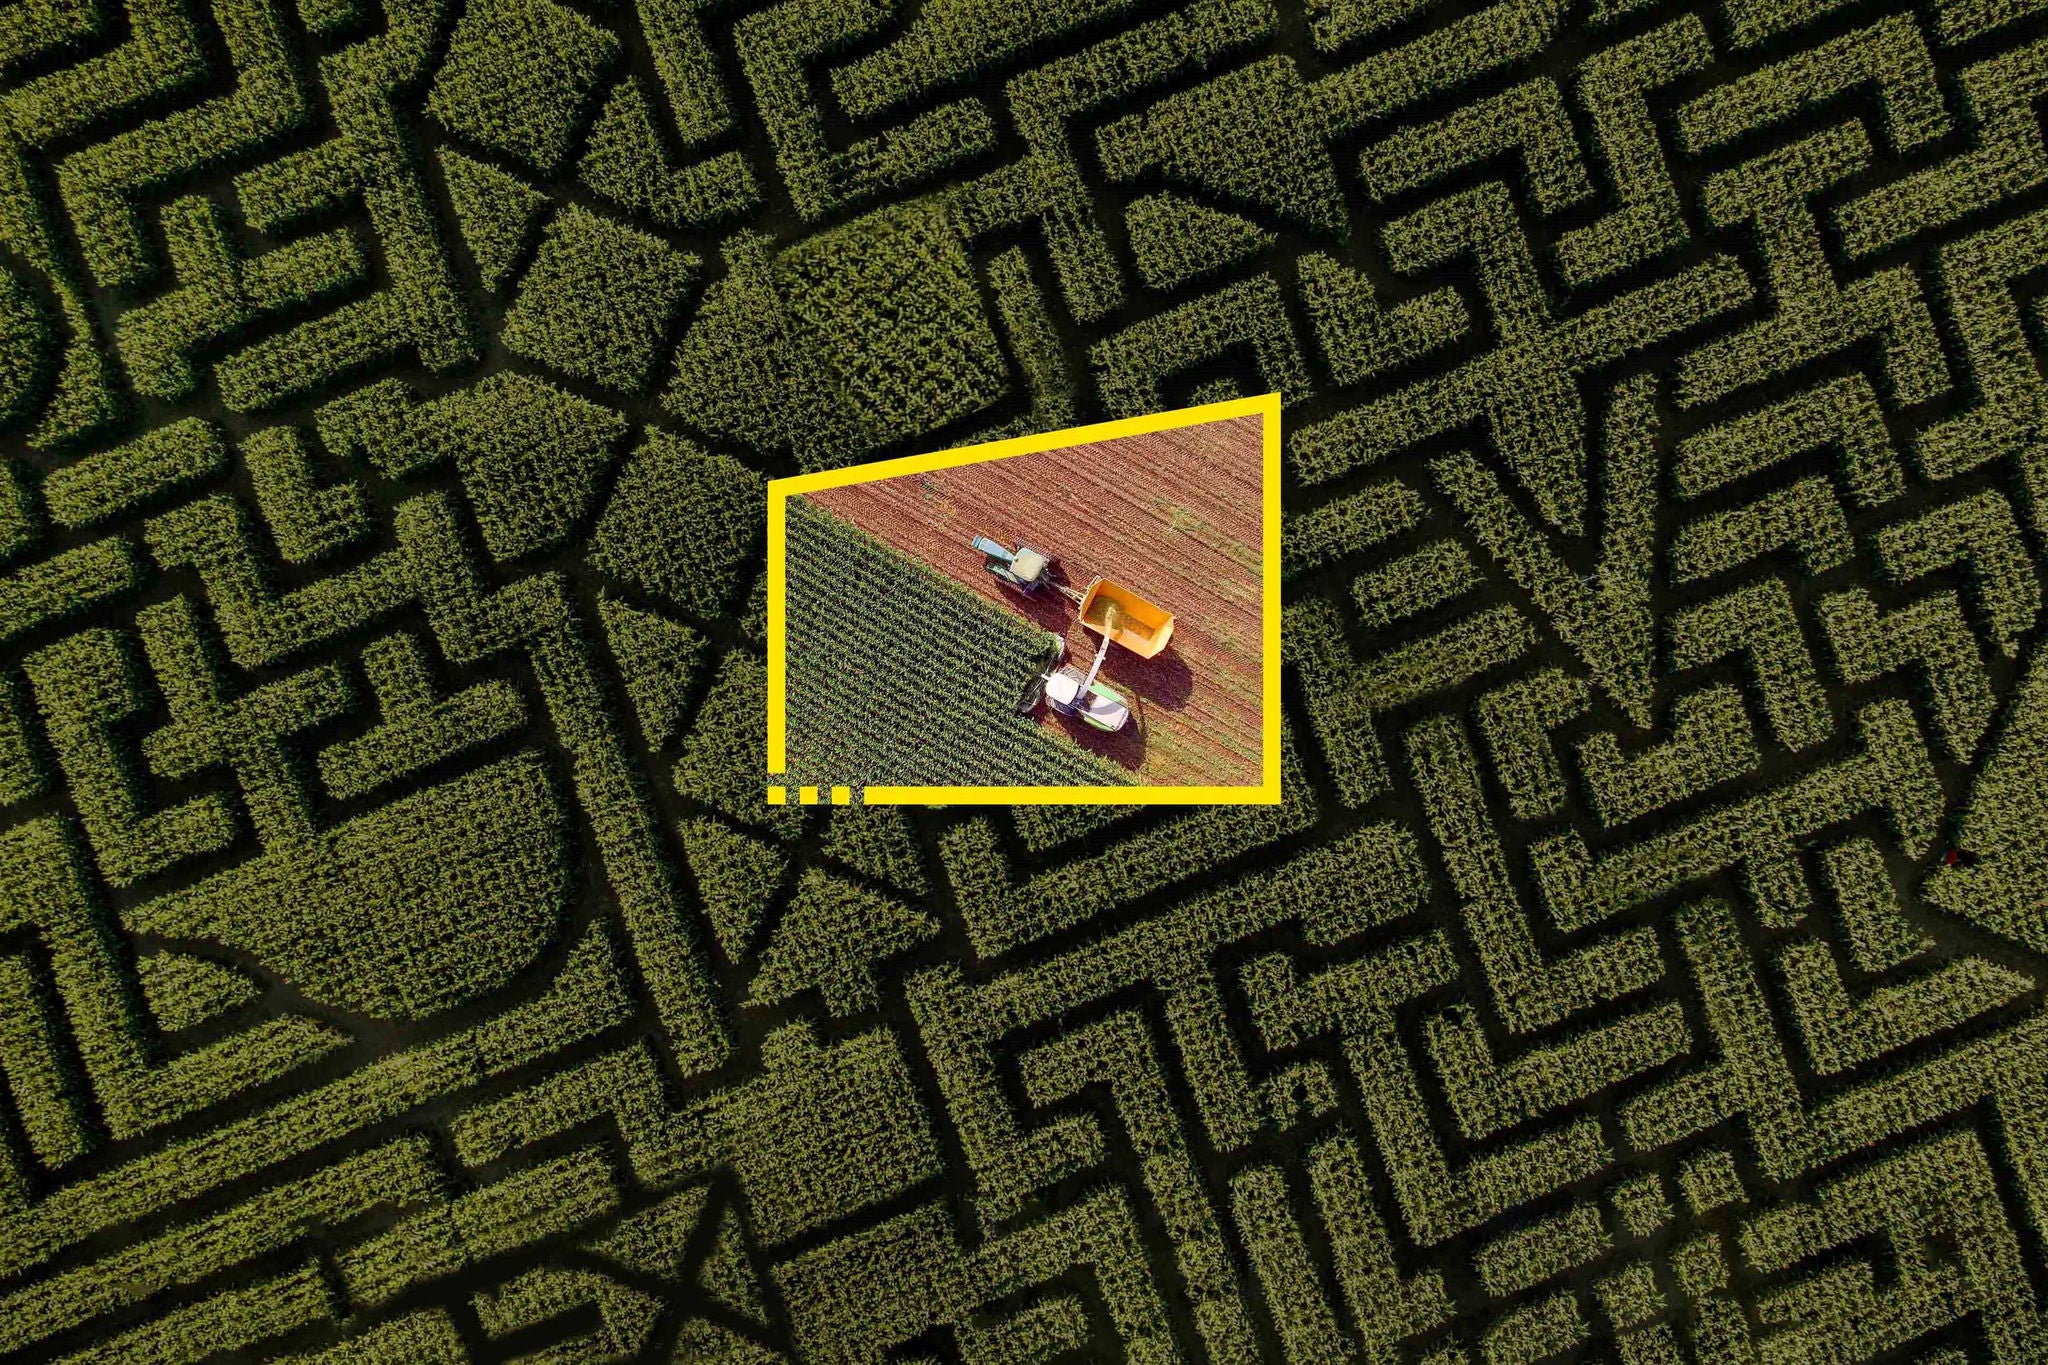 Reframe your future maze farmers